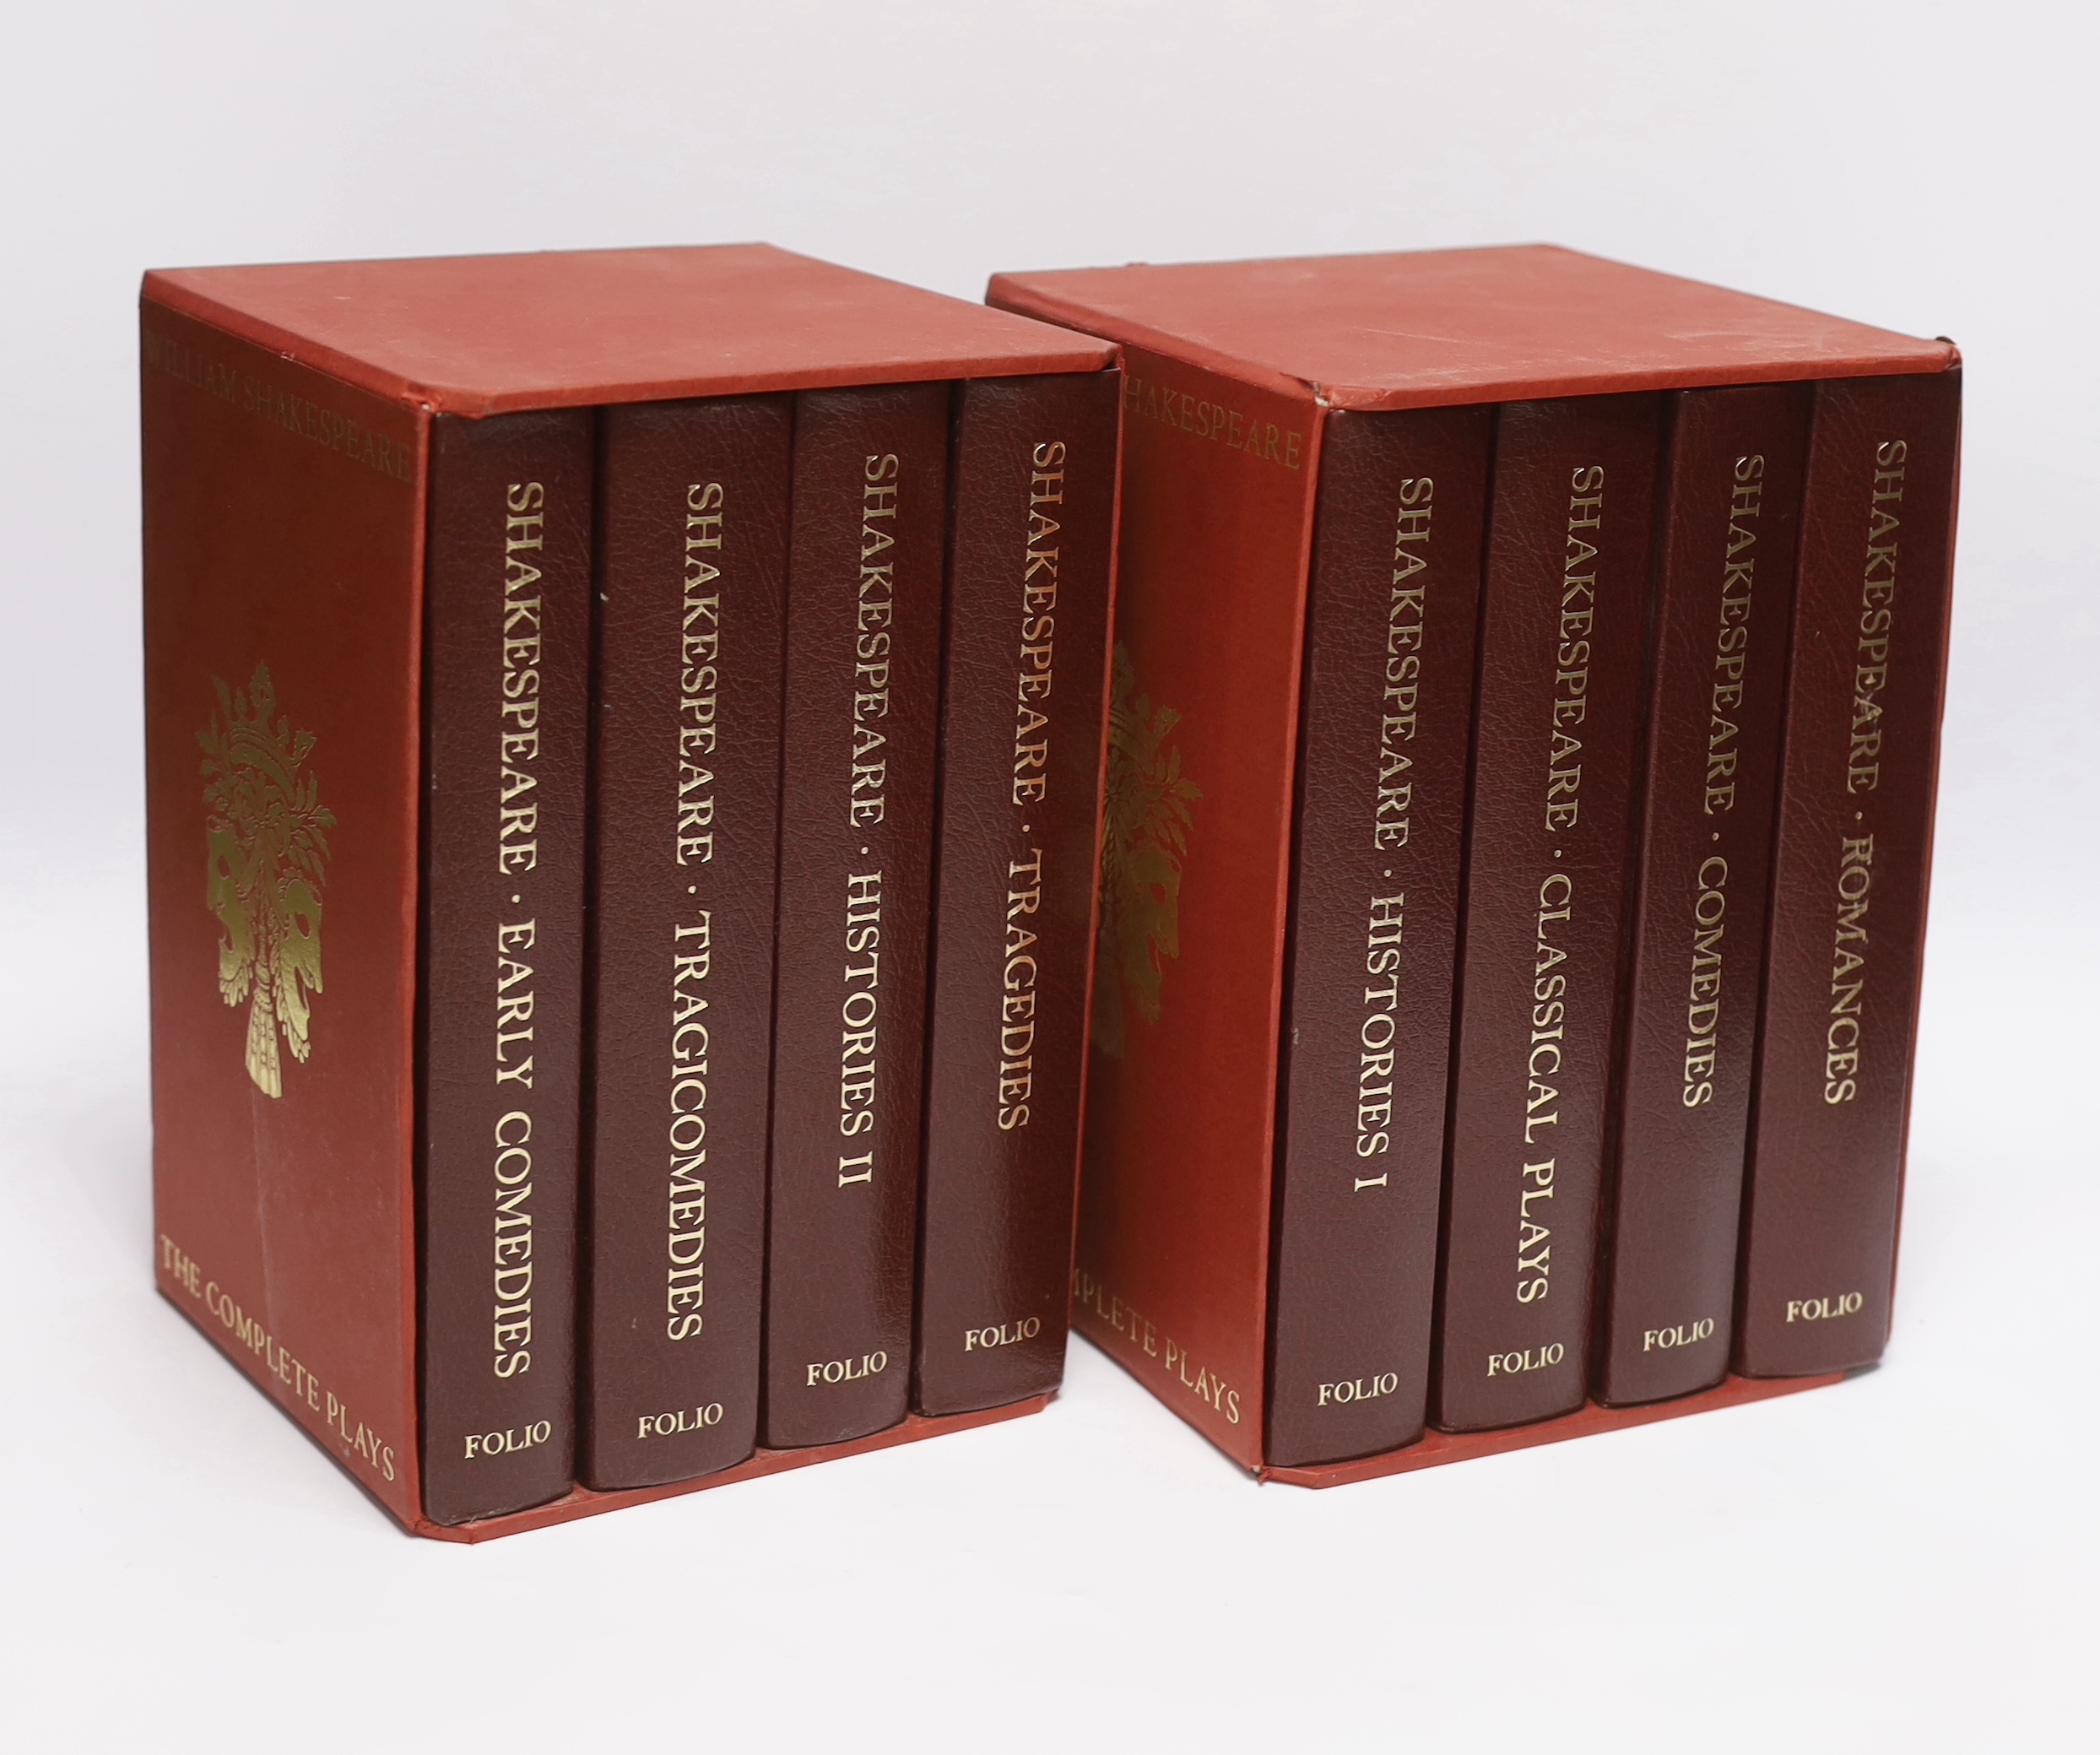 Shakespeare folio society books - cased                                                                                                                                                                                     